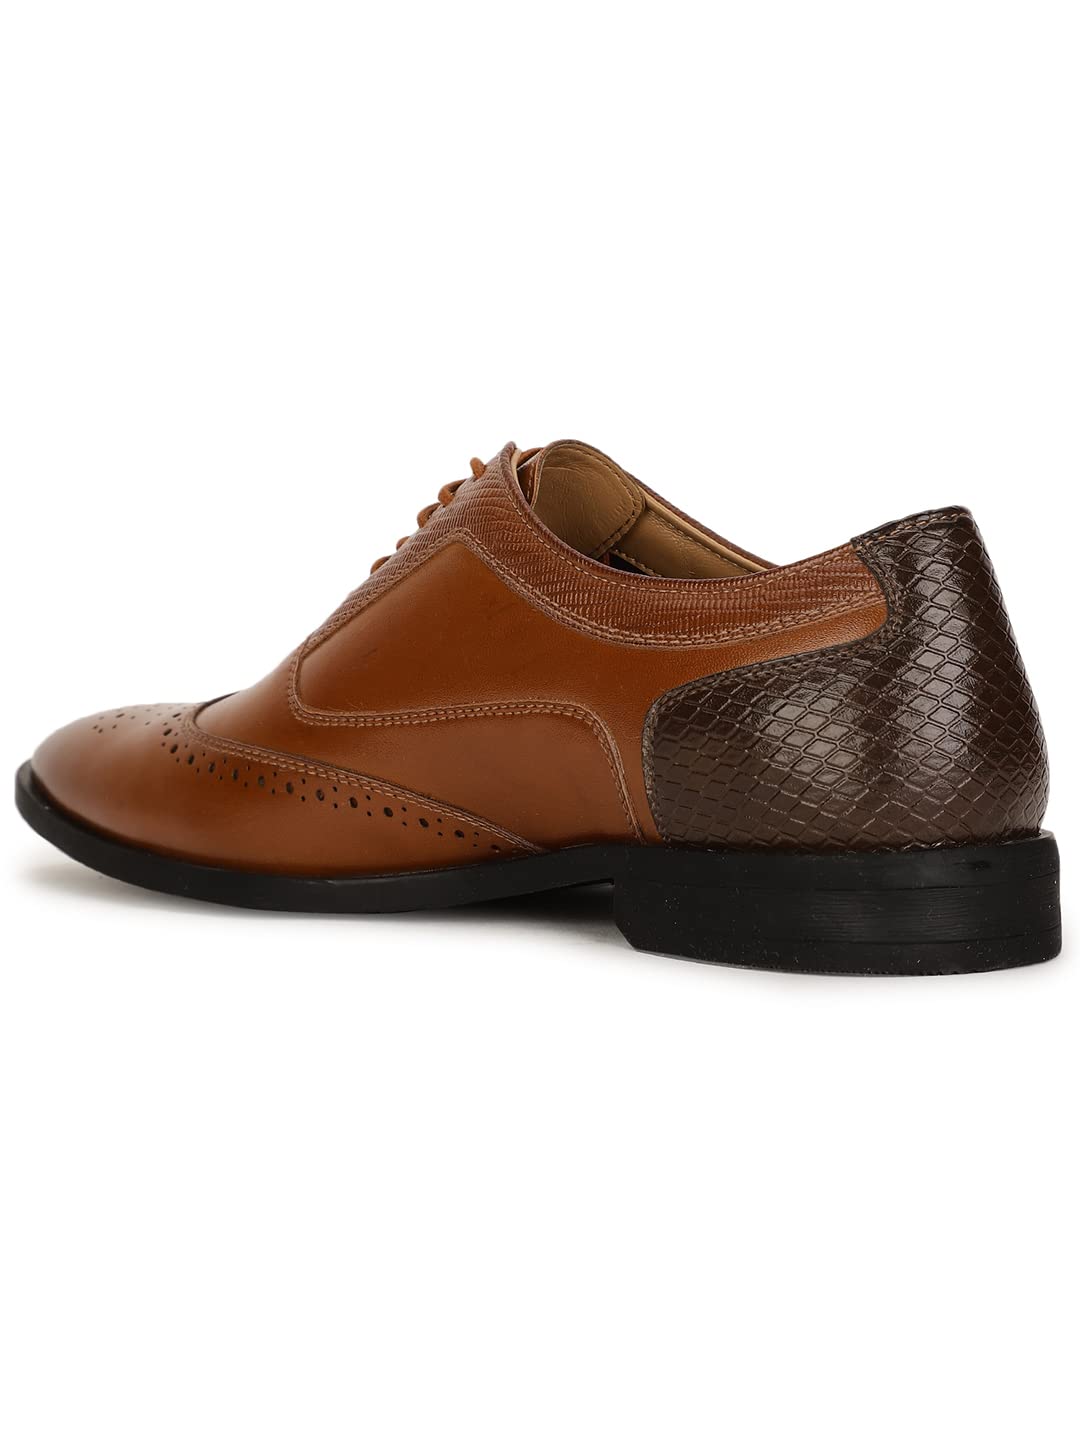 BATA Men VARYS Oxford TAN Formal Shoe - 12 UK 